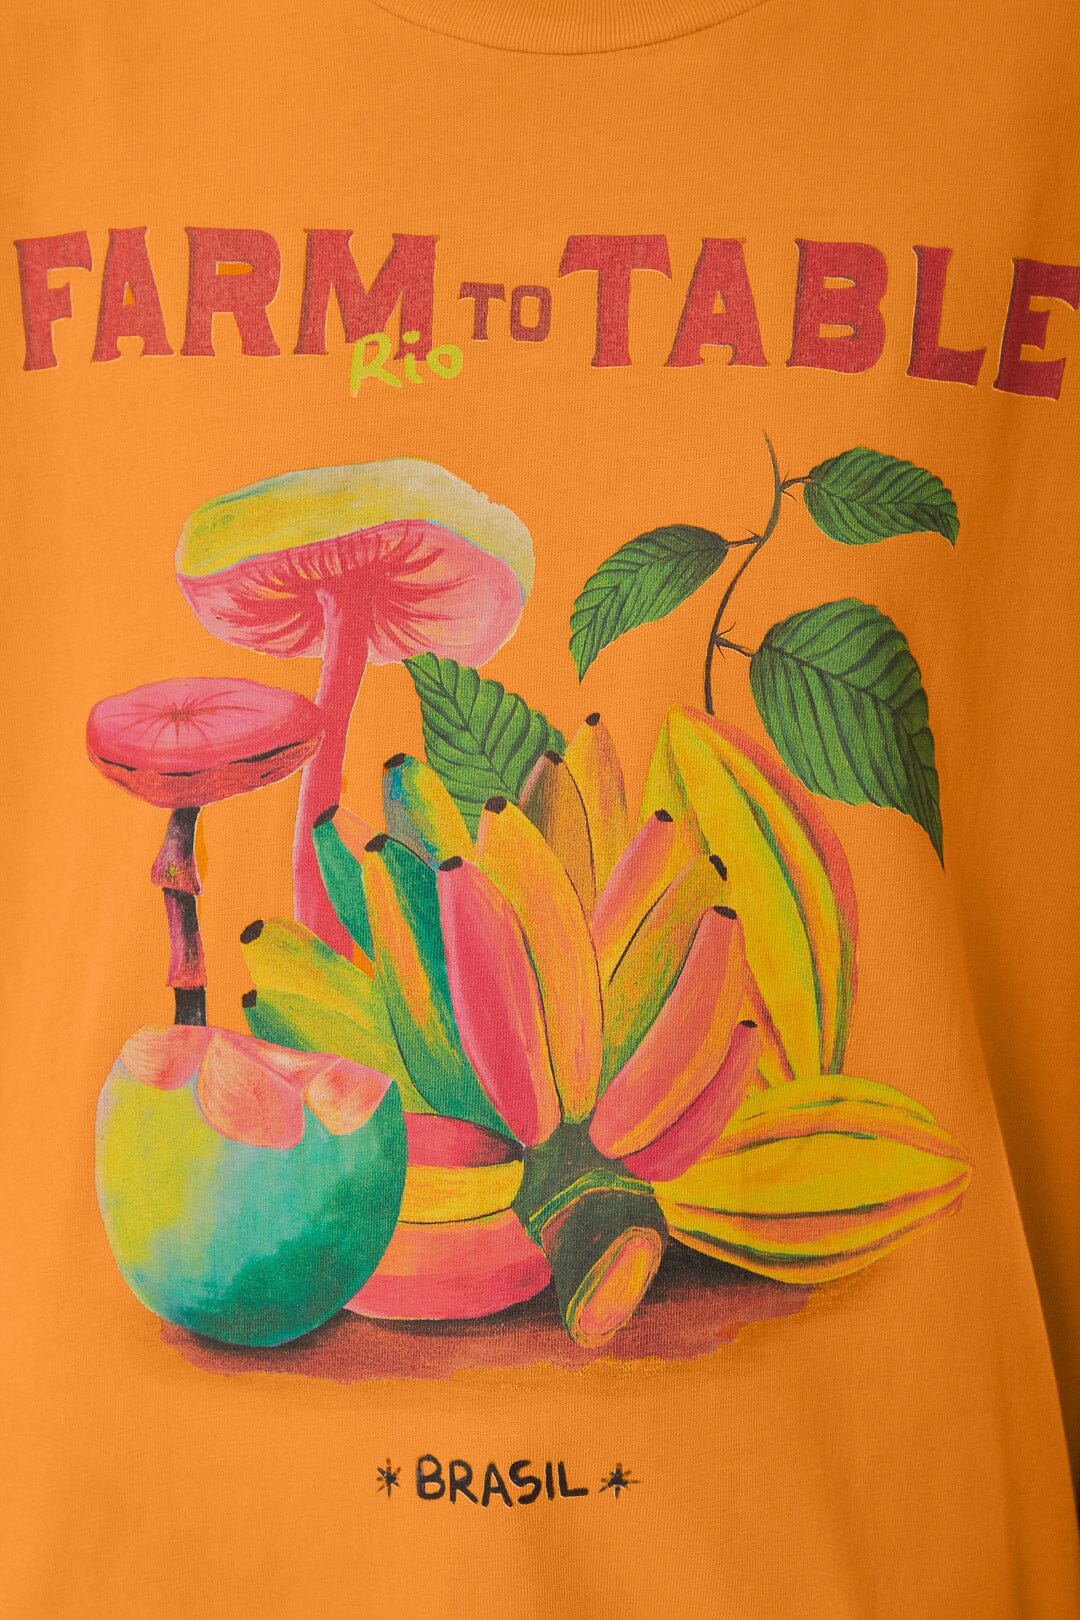 Orange Farm Rio To Table Organic Cotton T-Shirt